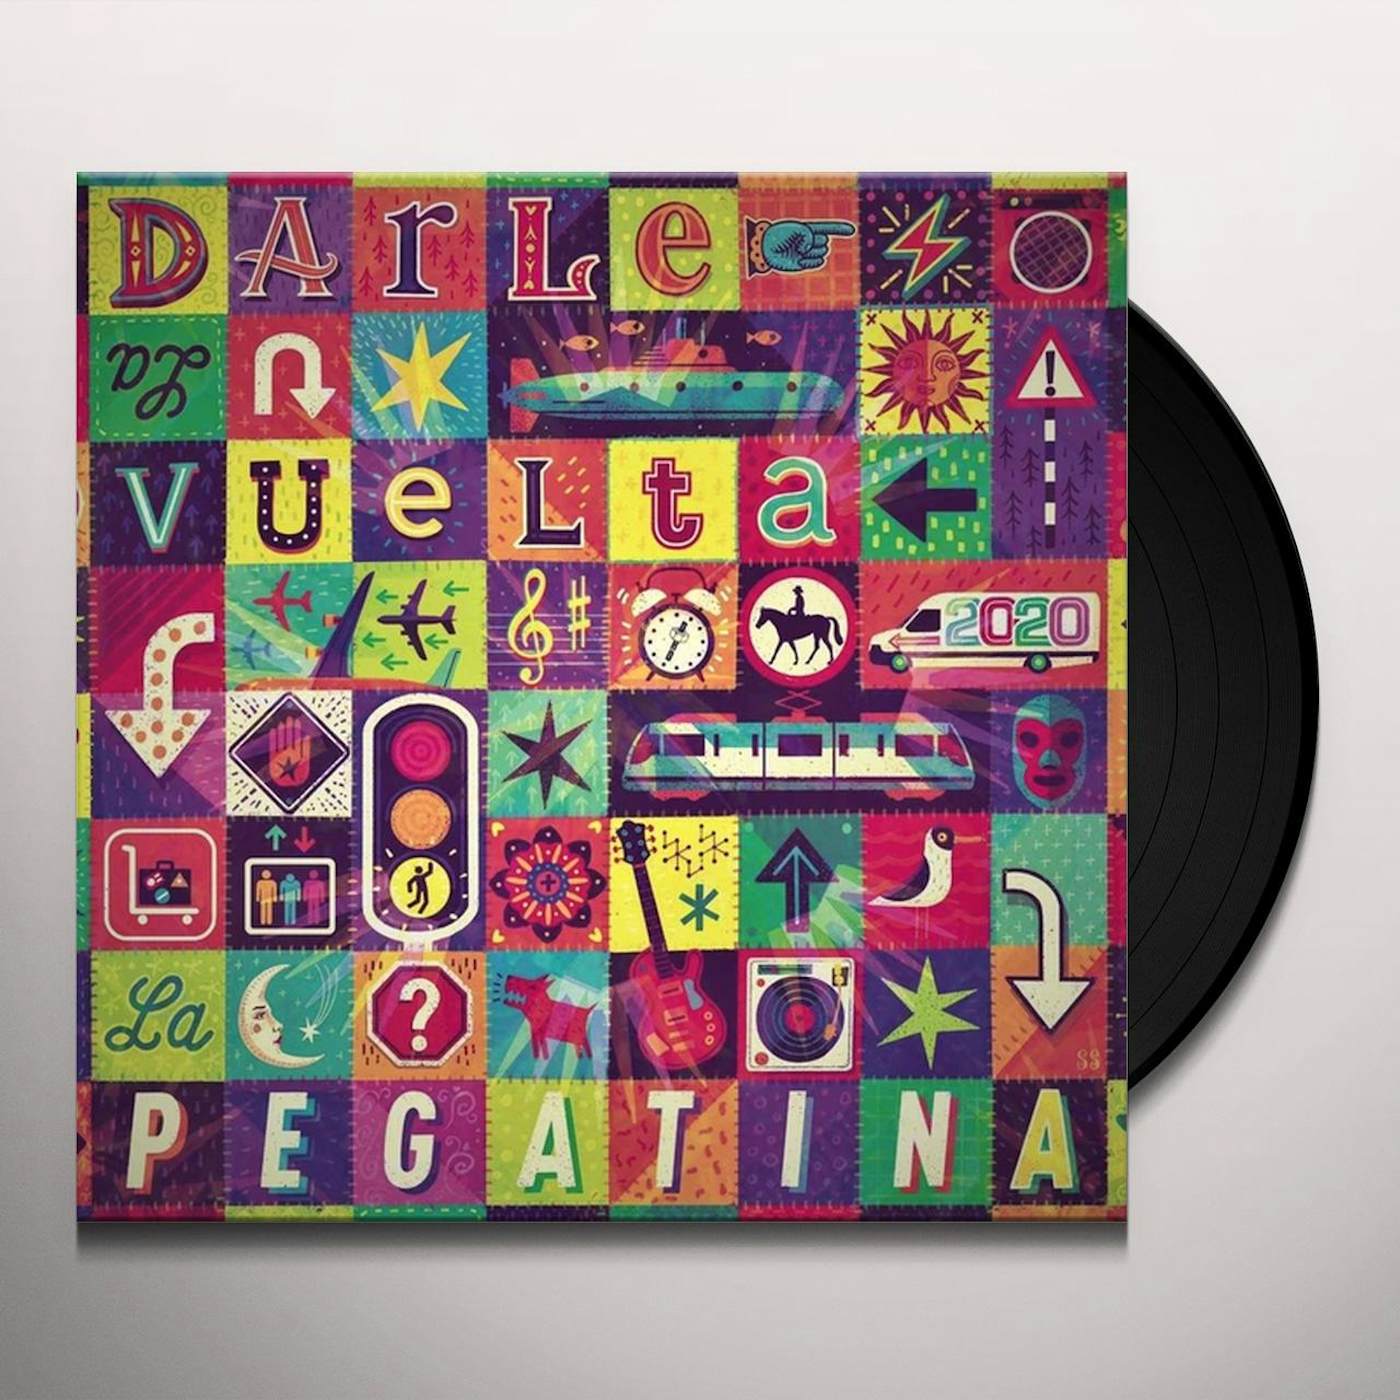 La Pegatina Darle la vuelta Vinyl Record